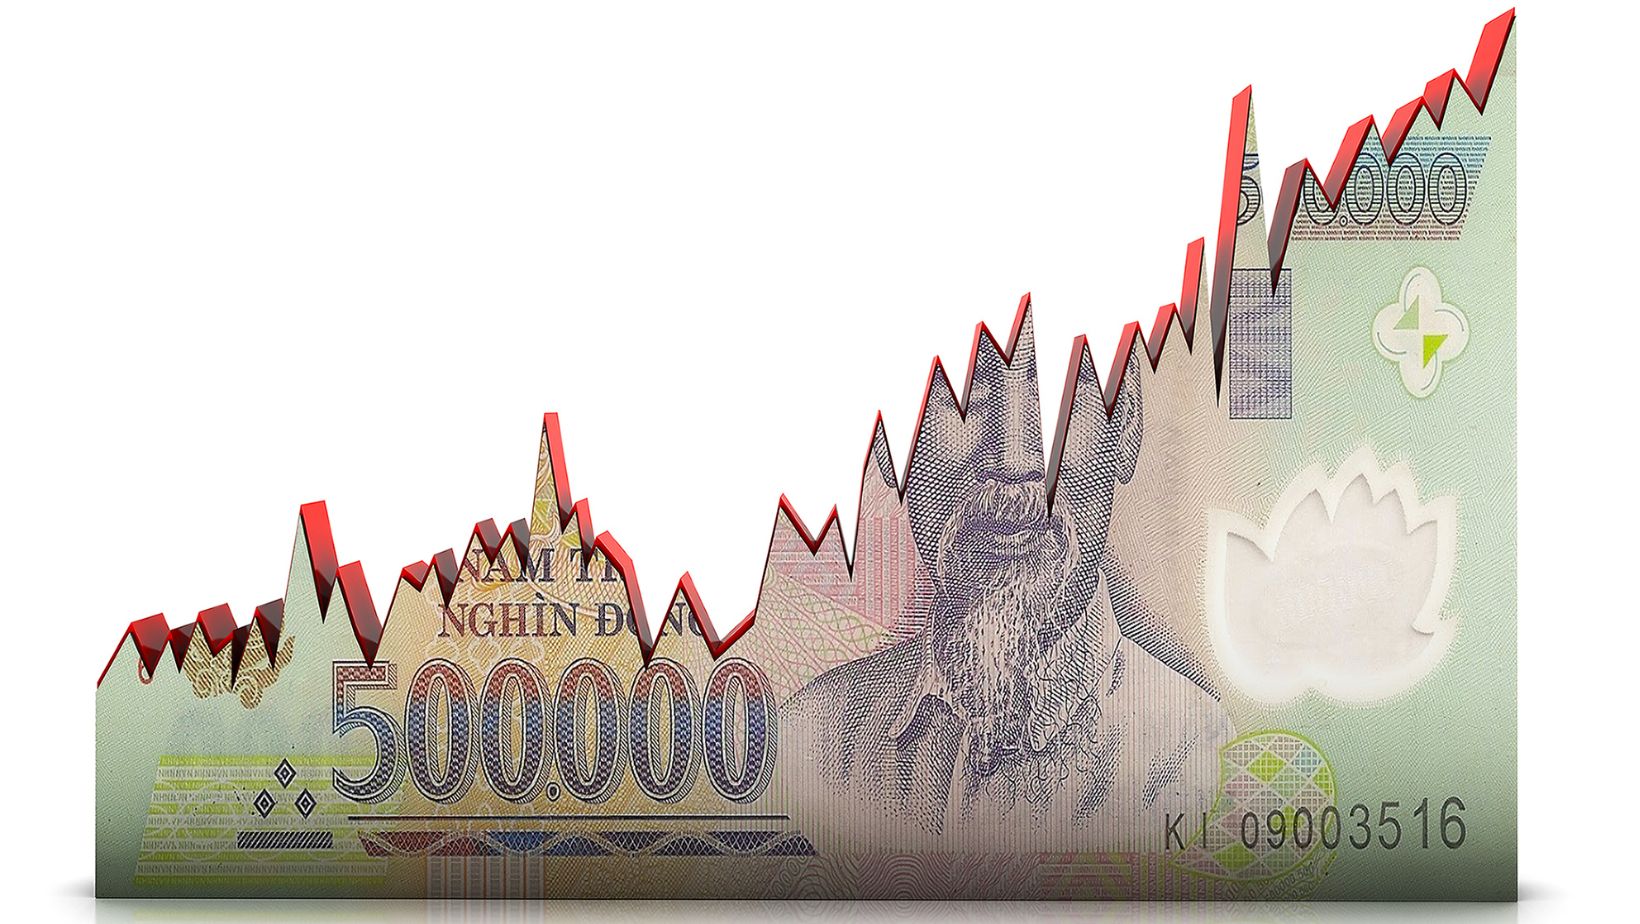 500,000 Vietnamese dollar banknote as a graph